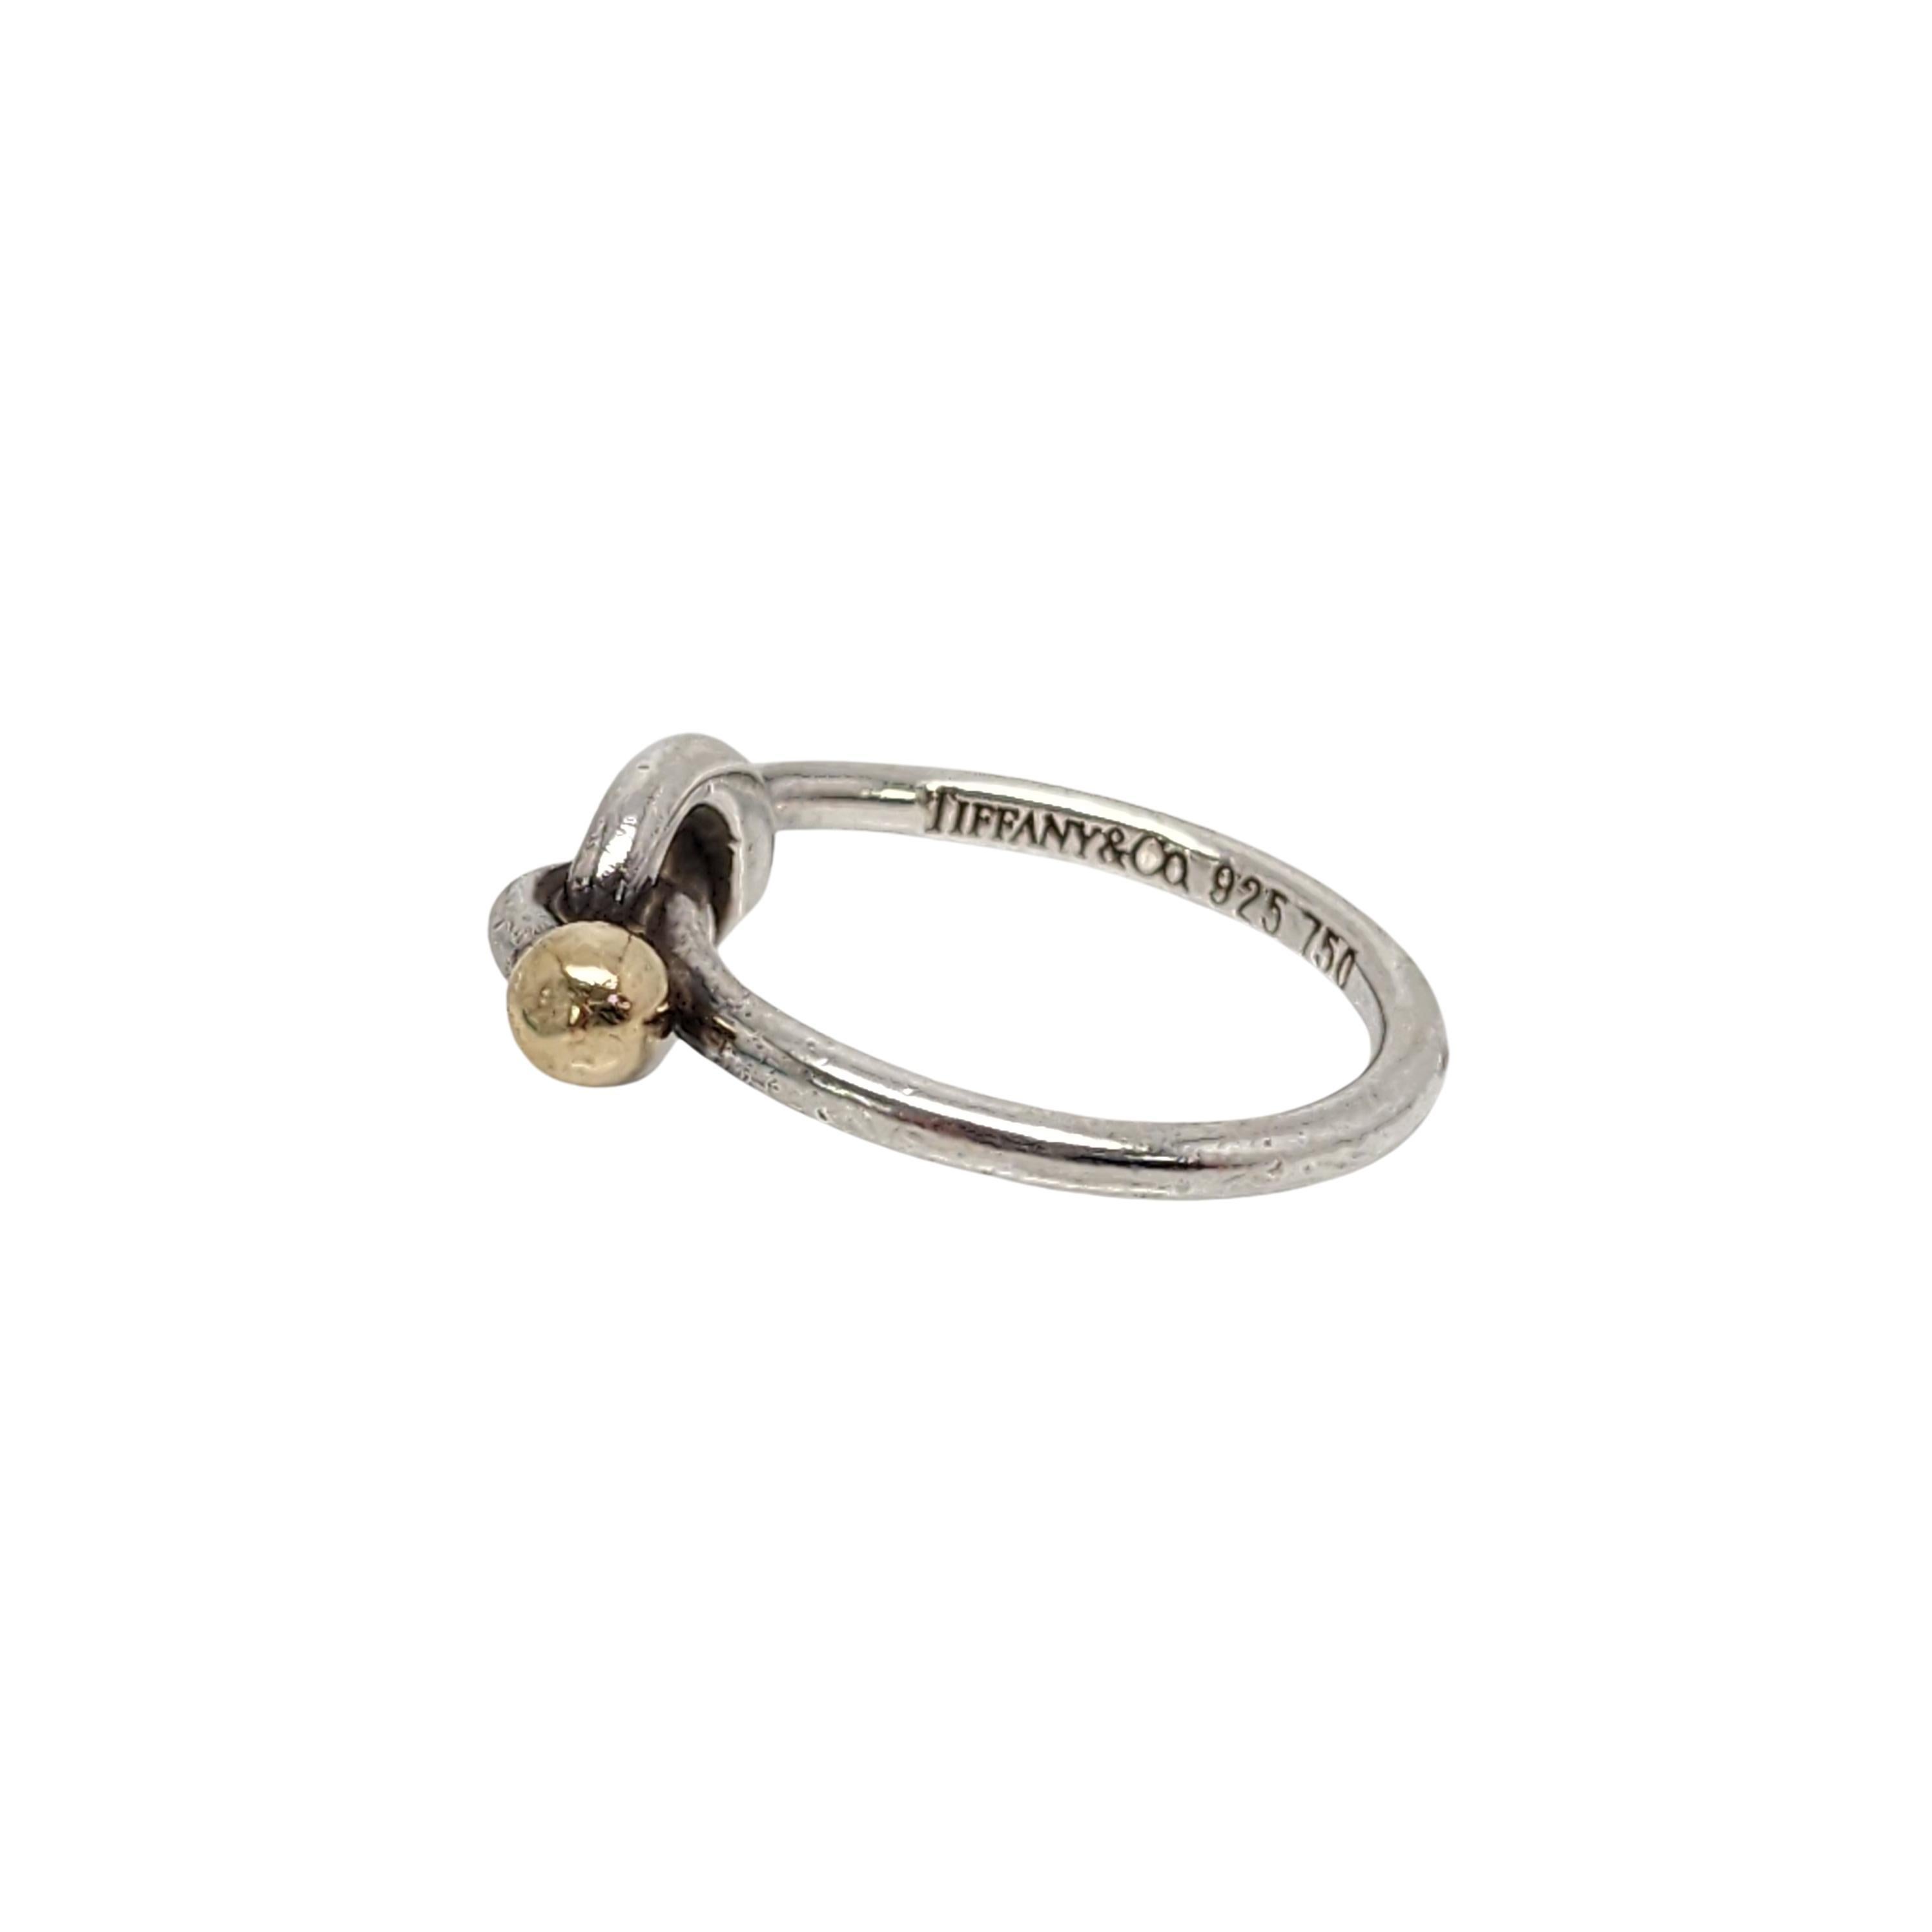 tiffany knot ring price